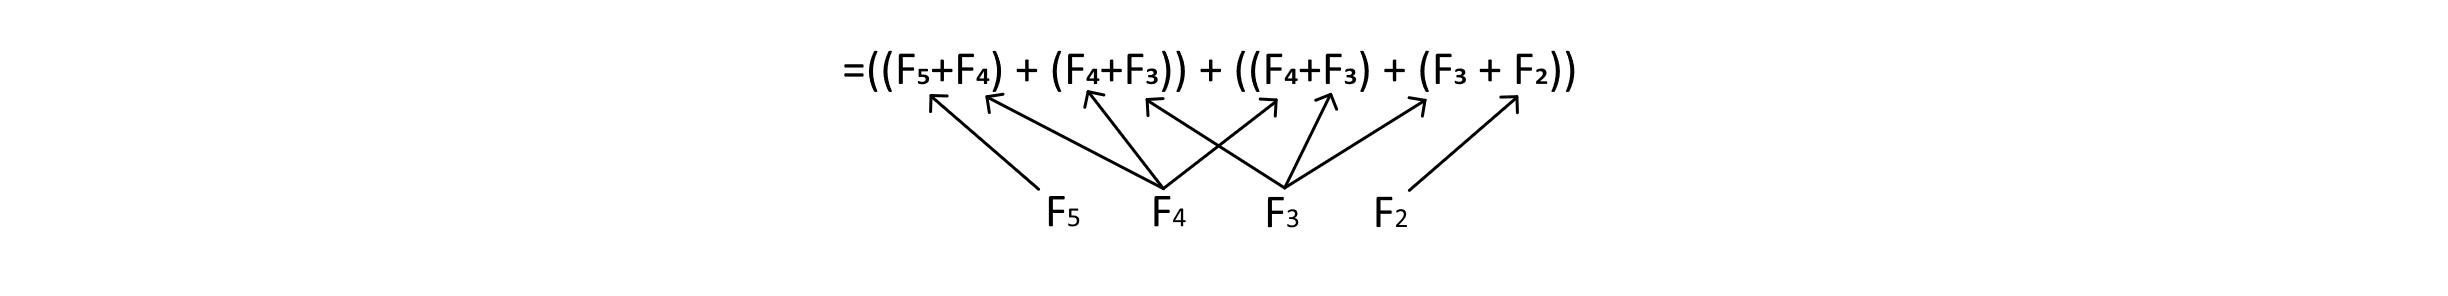 An illustration of the redundant factorial recursive calls for the 8th Fibonacci number.